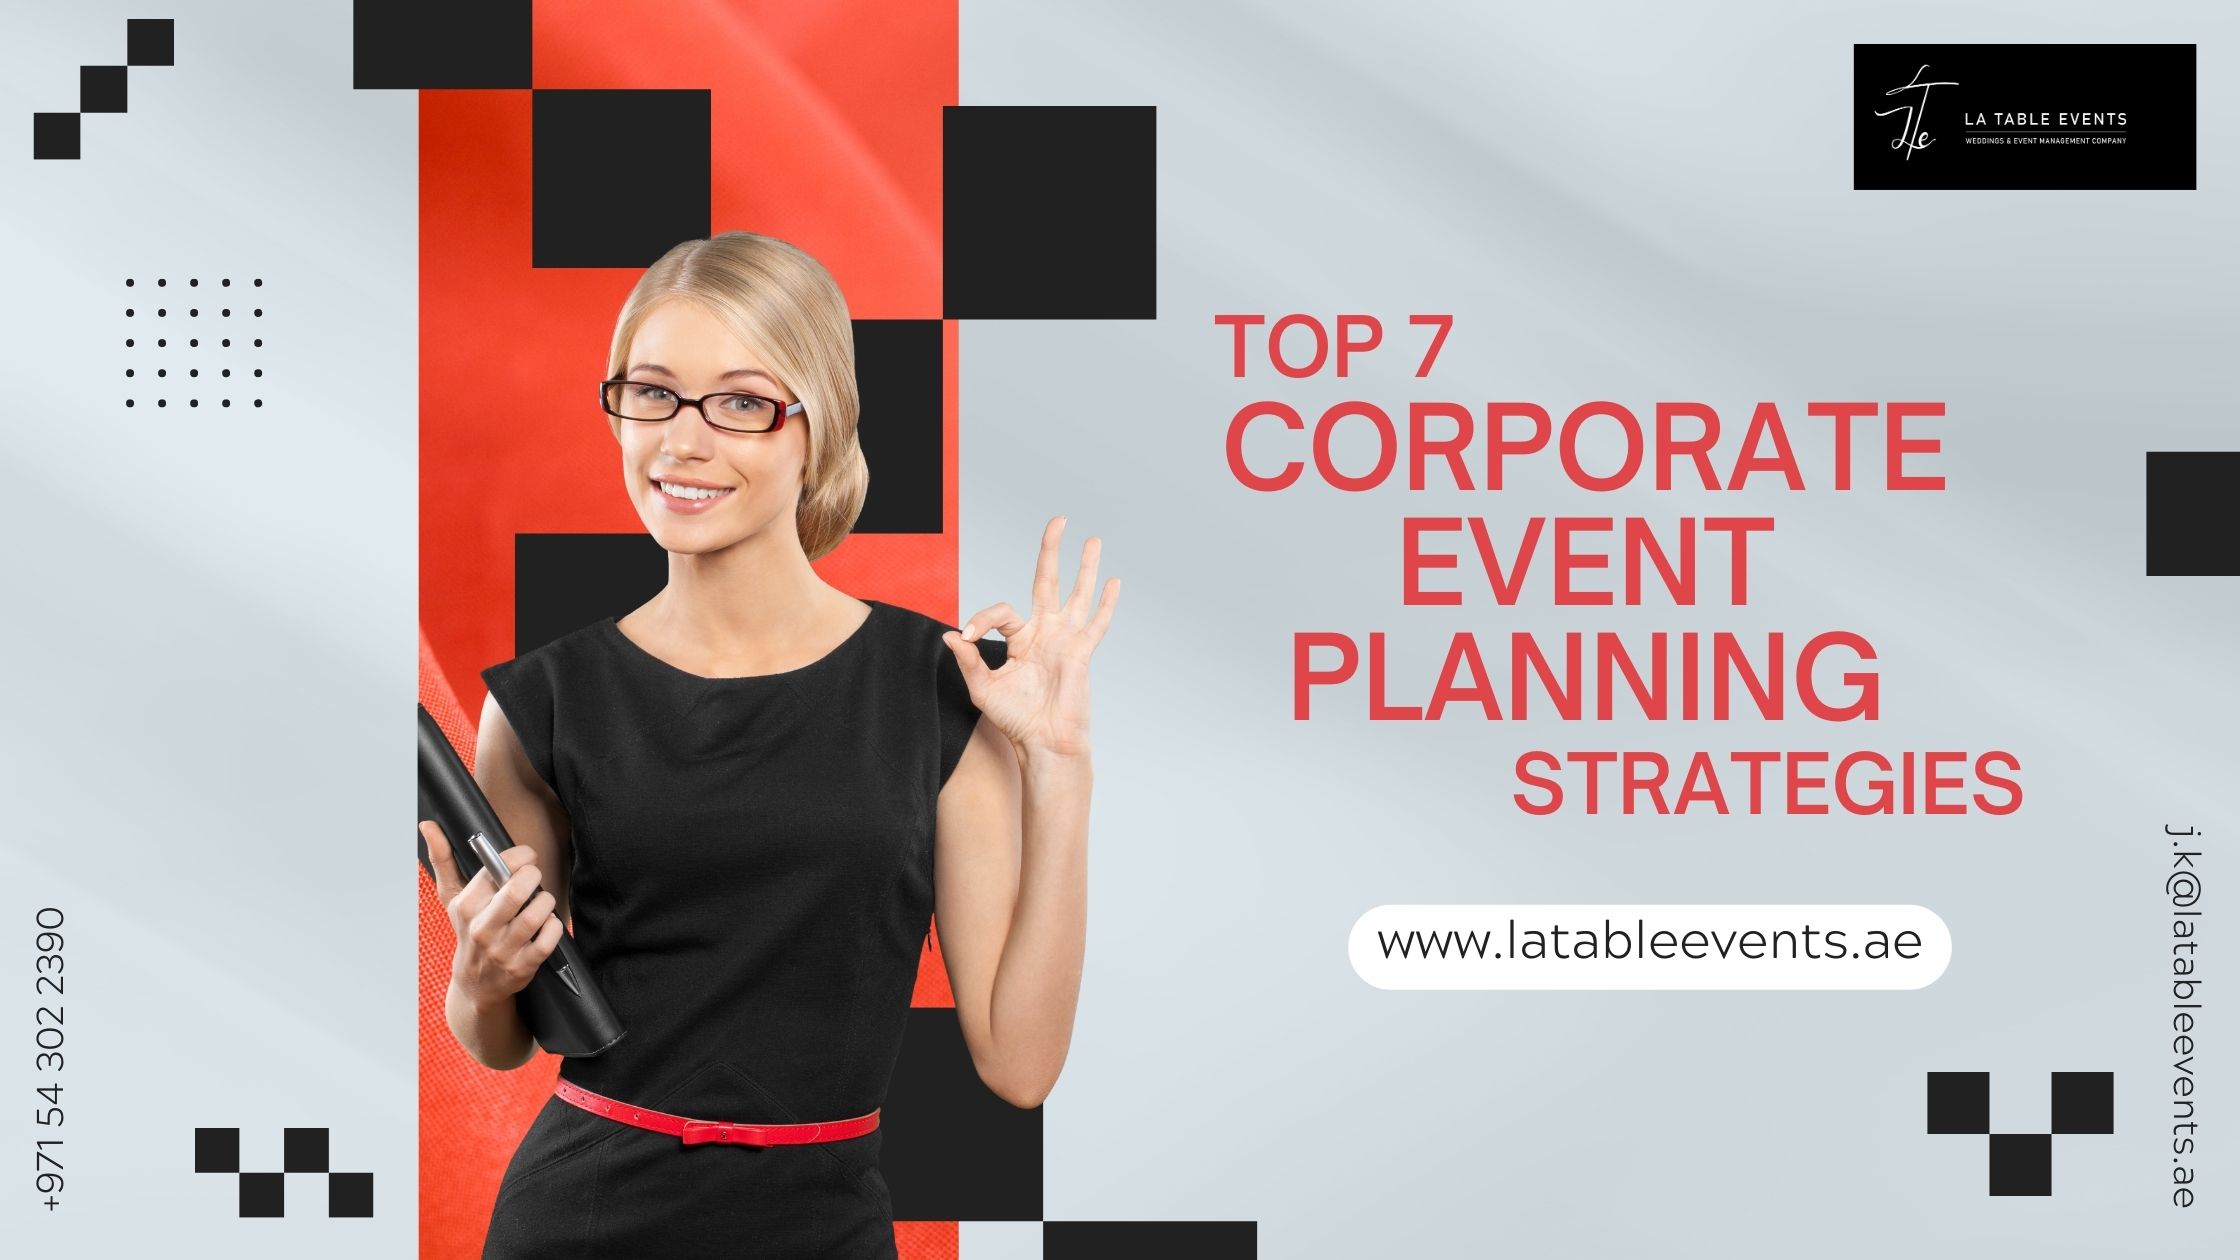 Top 7 Corporate Event Planning Strategies